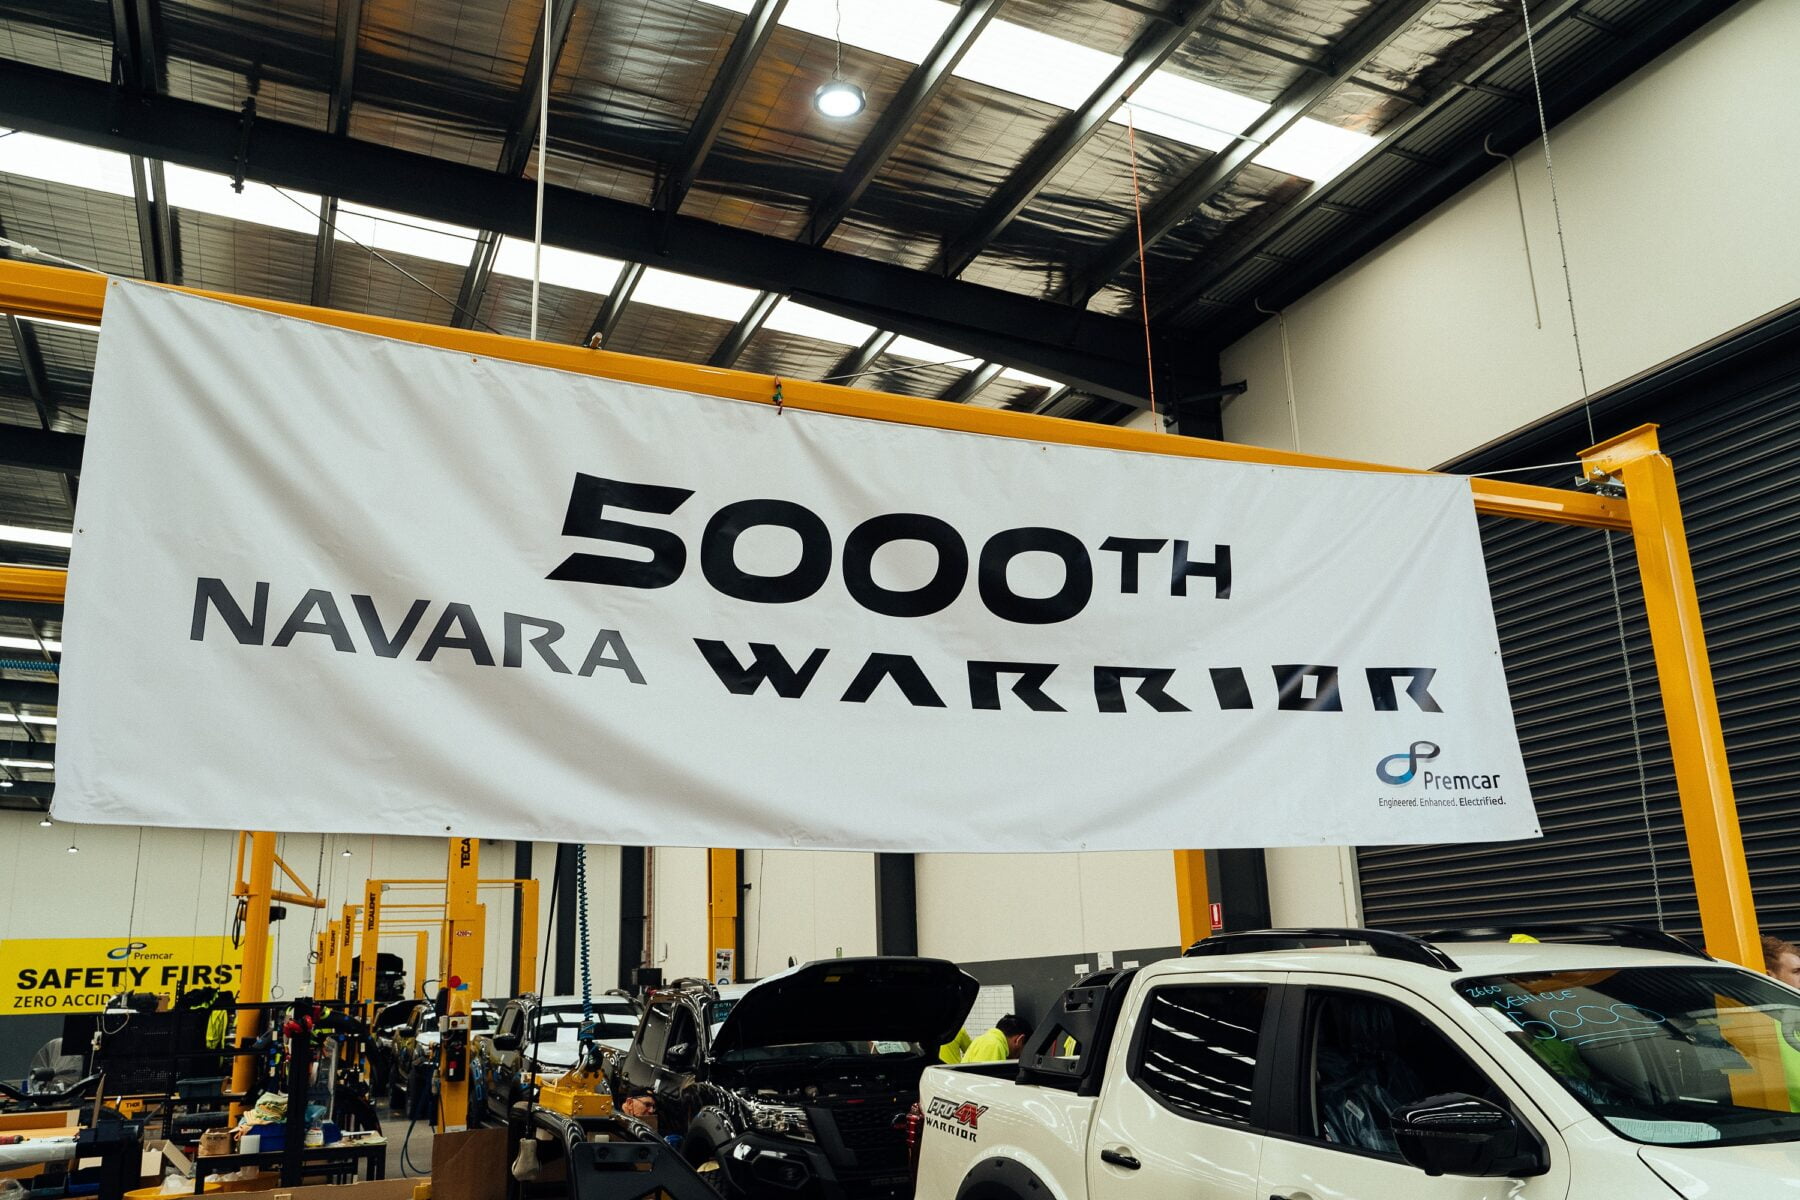 Nissan Premcar Warrior 4WD Ute 5000